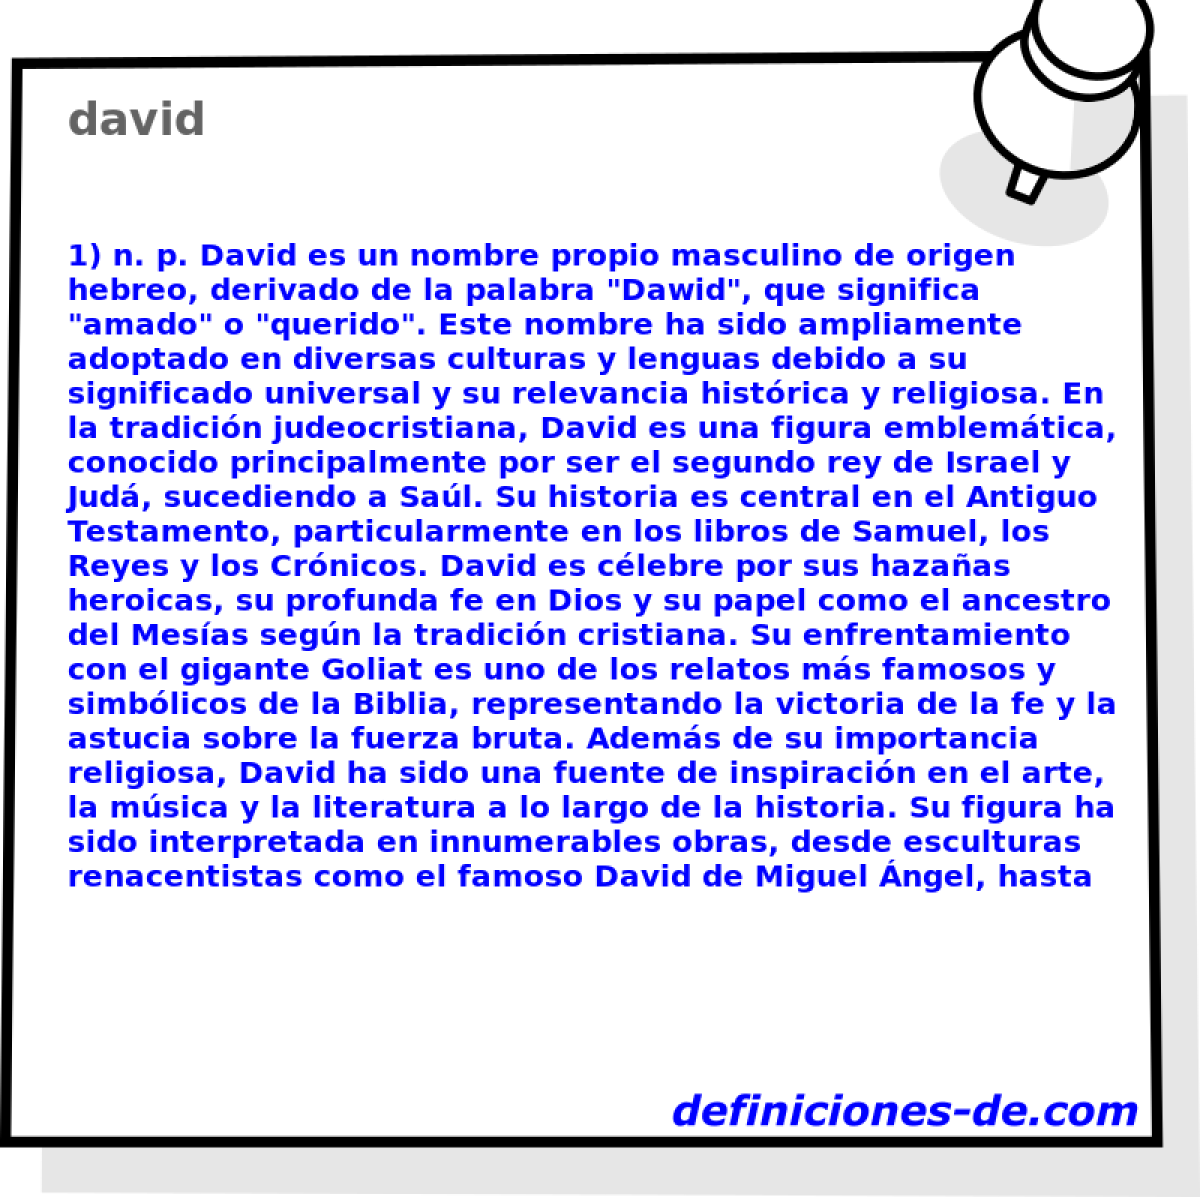 david 